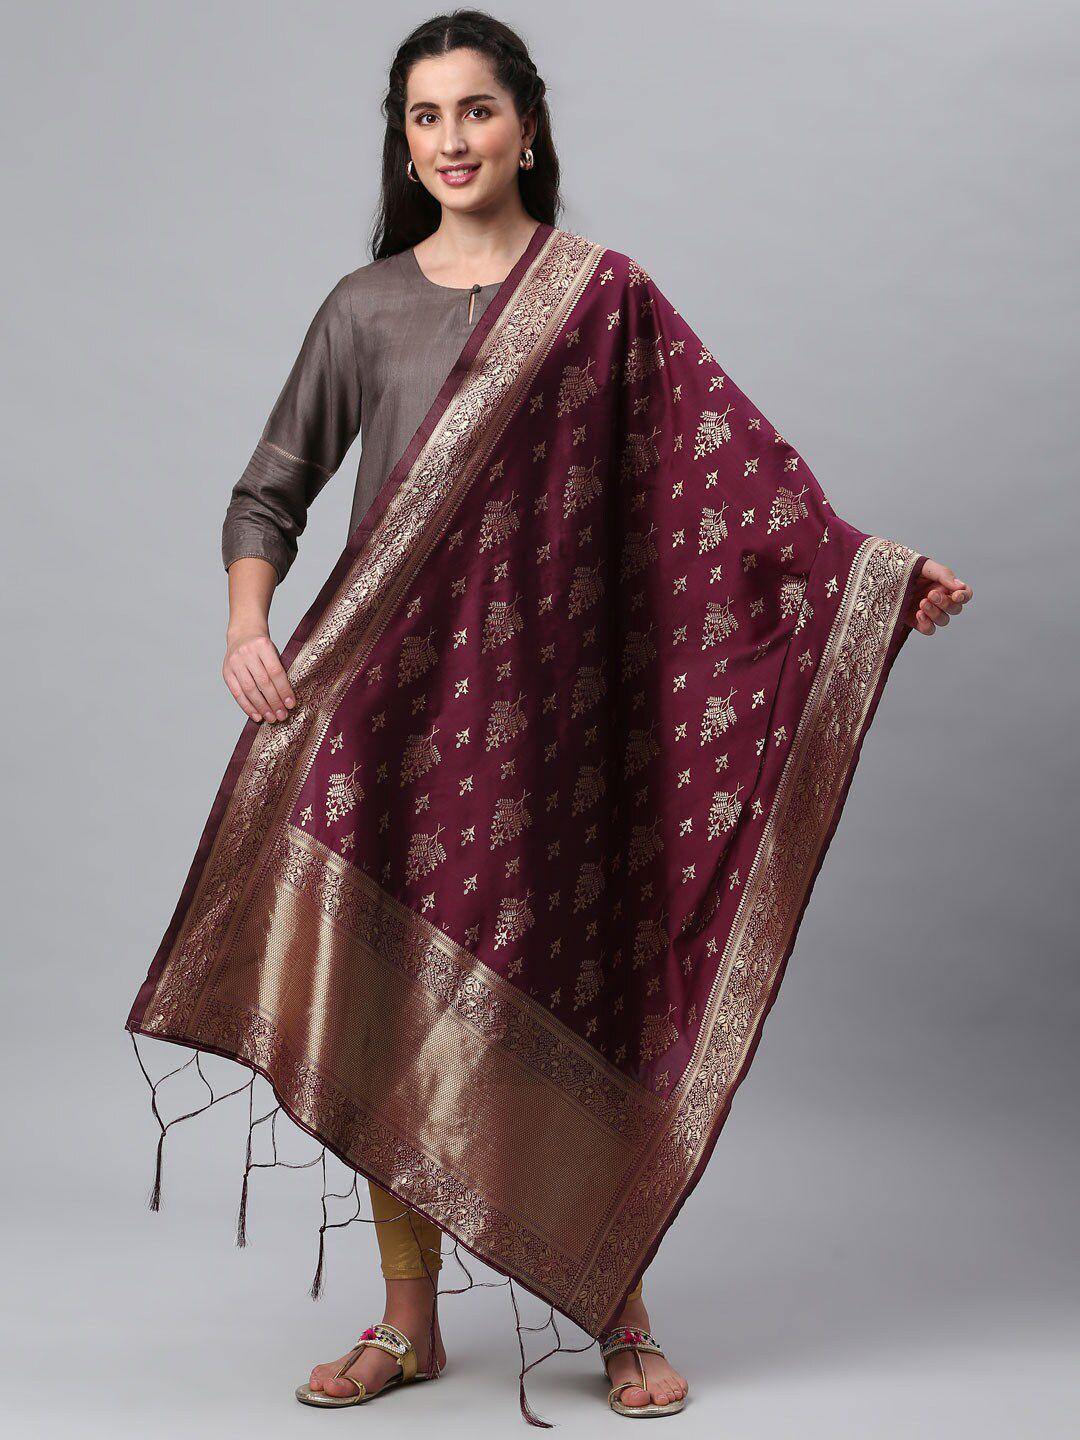 lilots burgundy & gold-toned ethnic motifs jacquard woven design dupatta